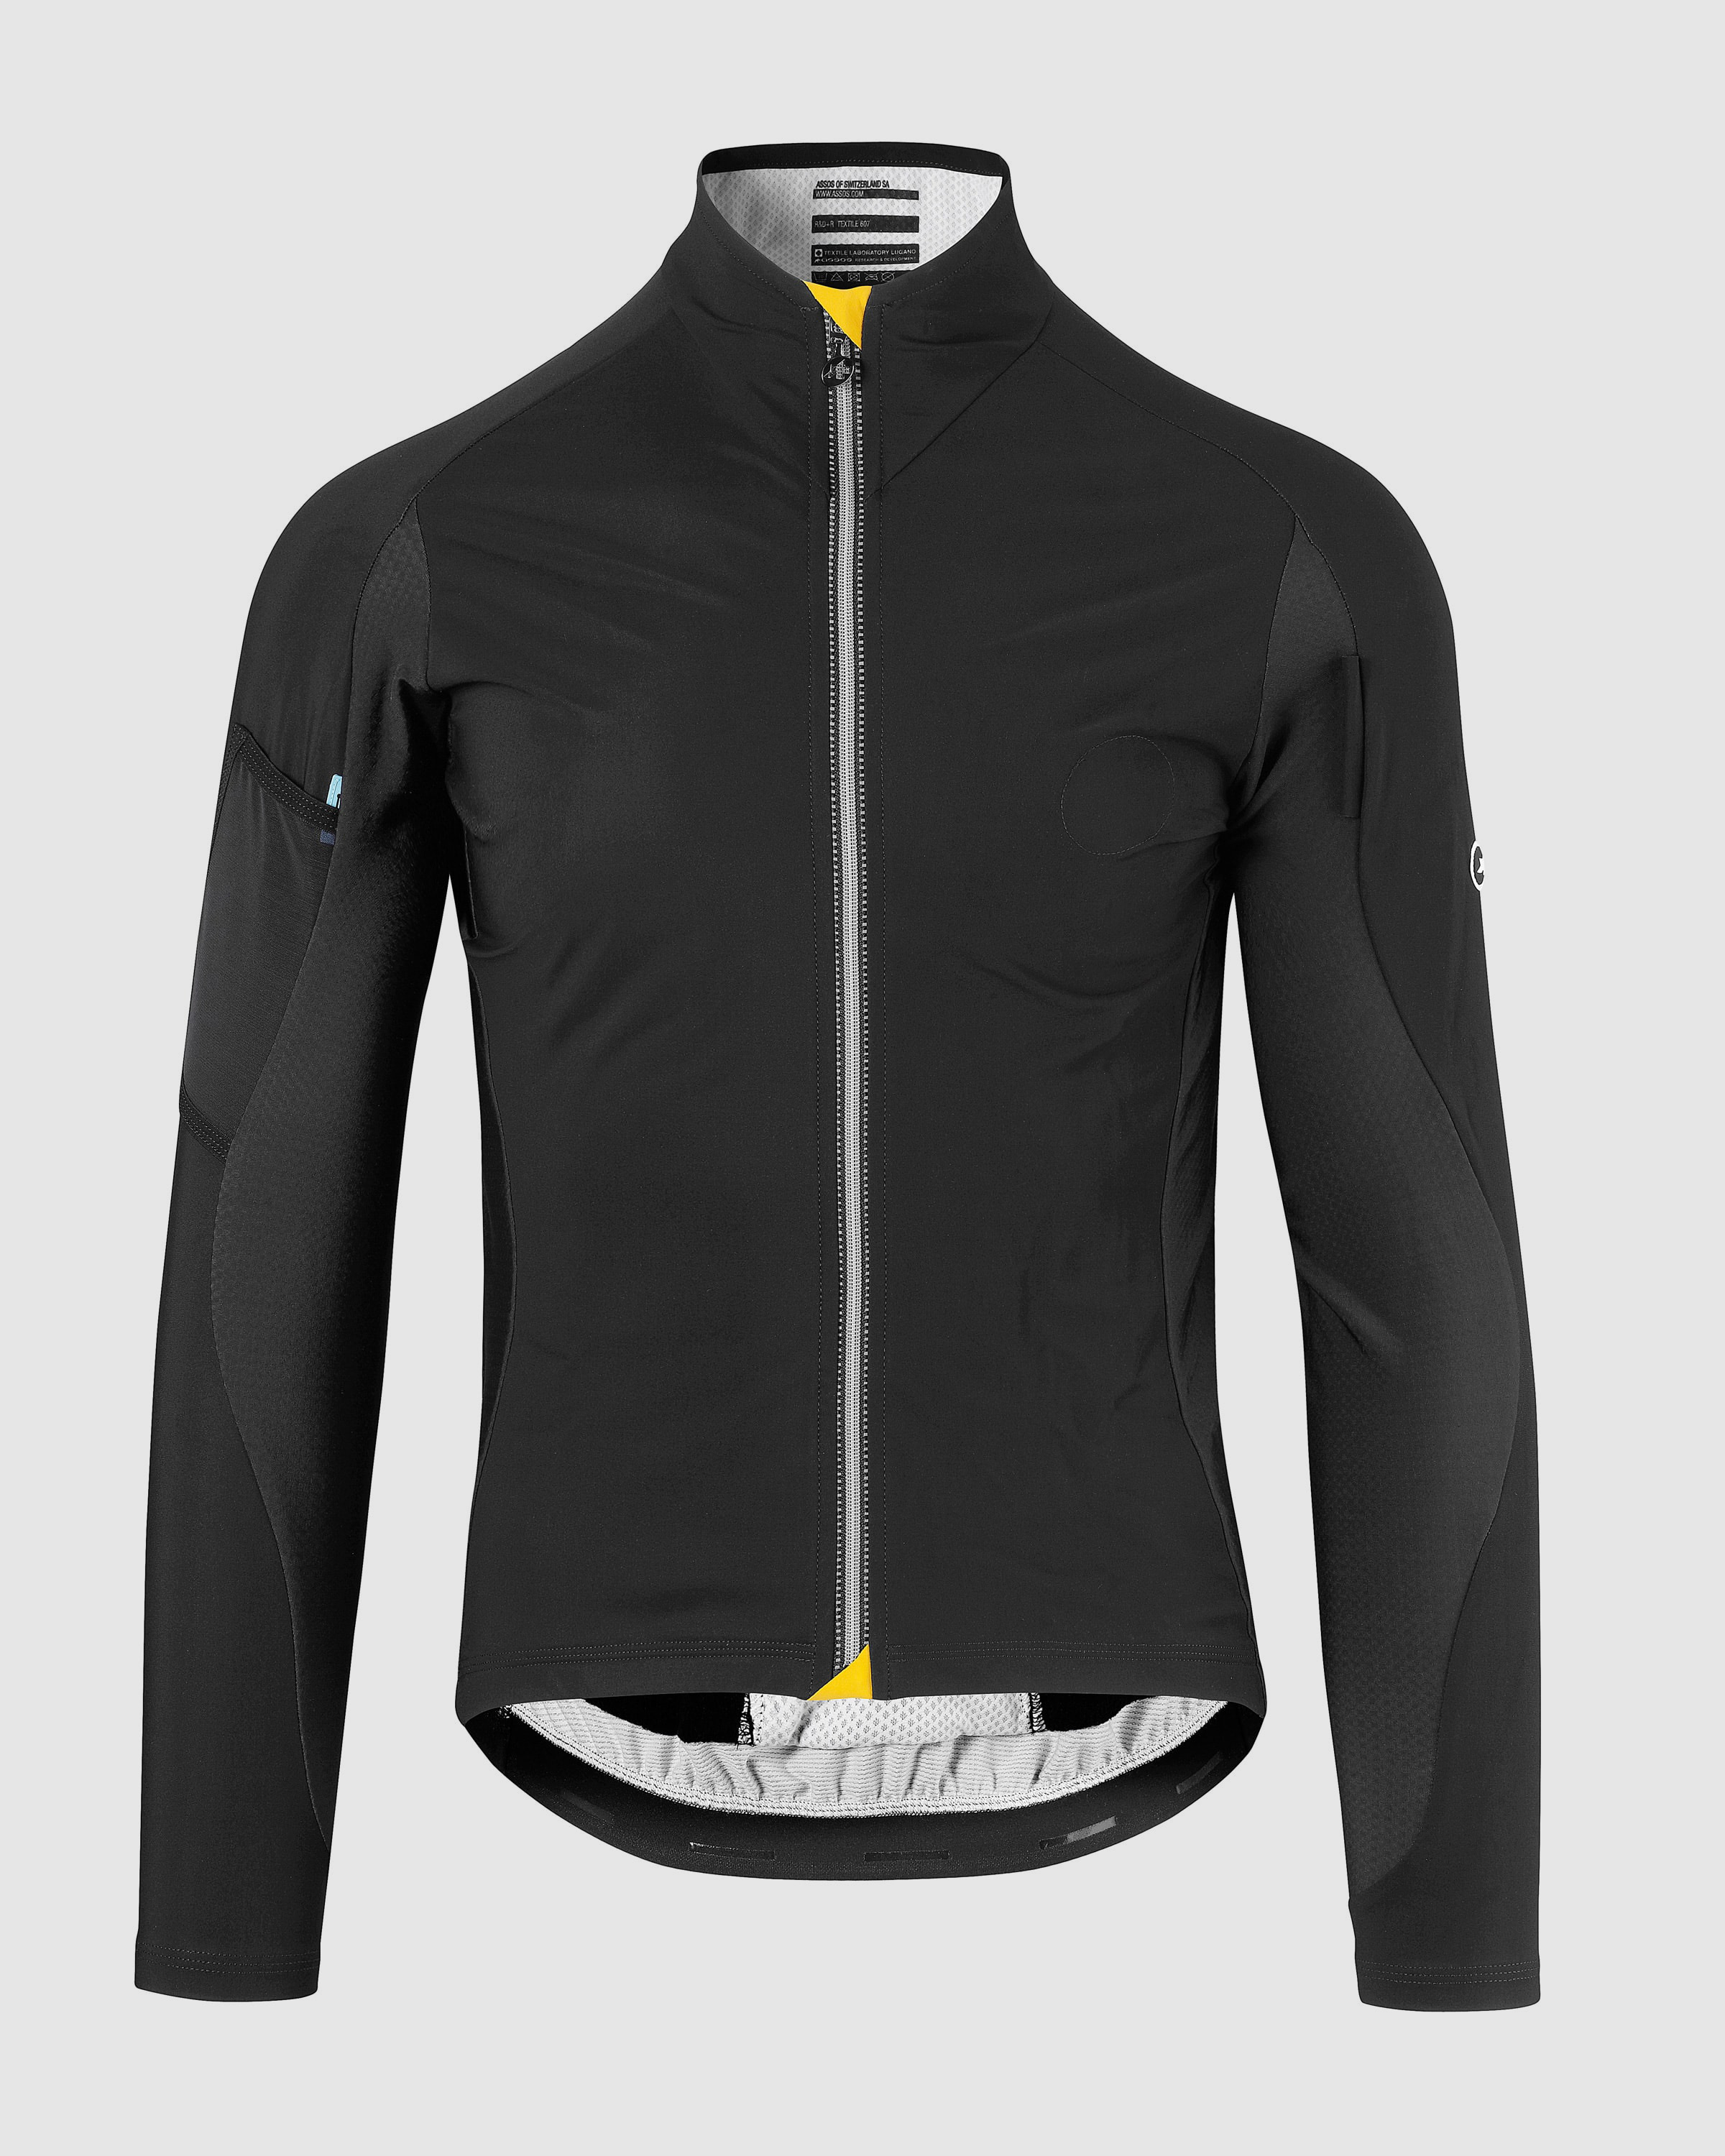 Assos Cycling Jacket Cheap Sale, 50% OFF | www.rupit.com